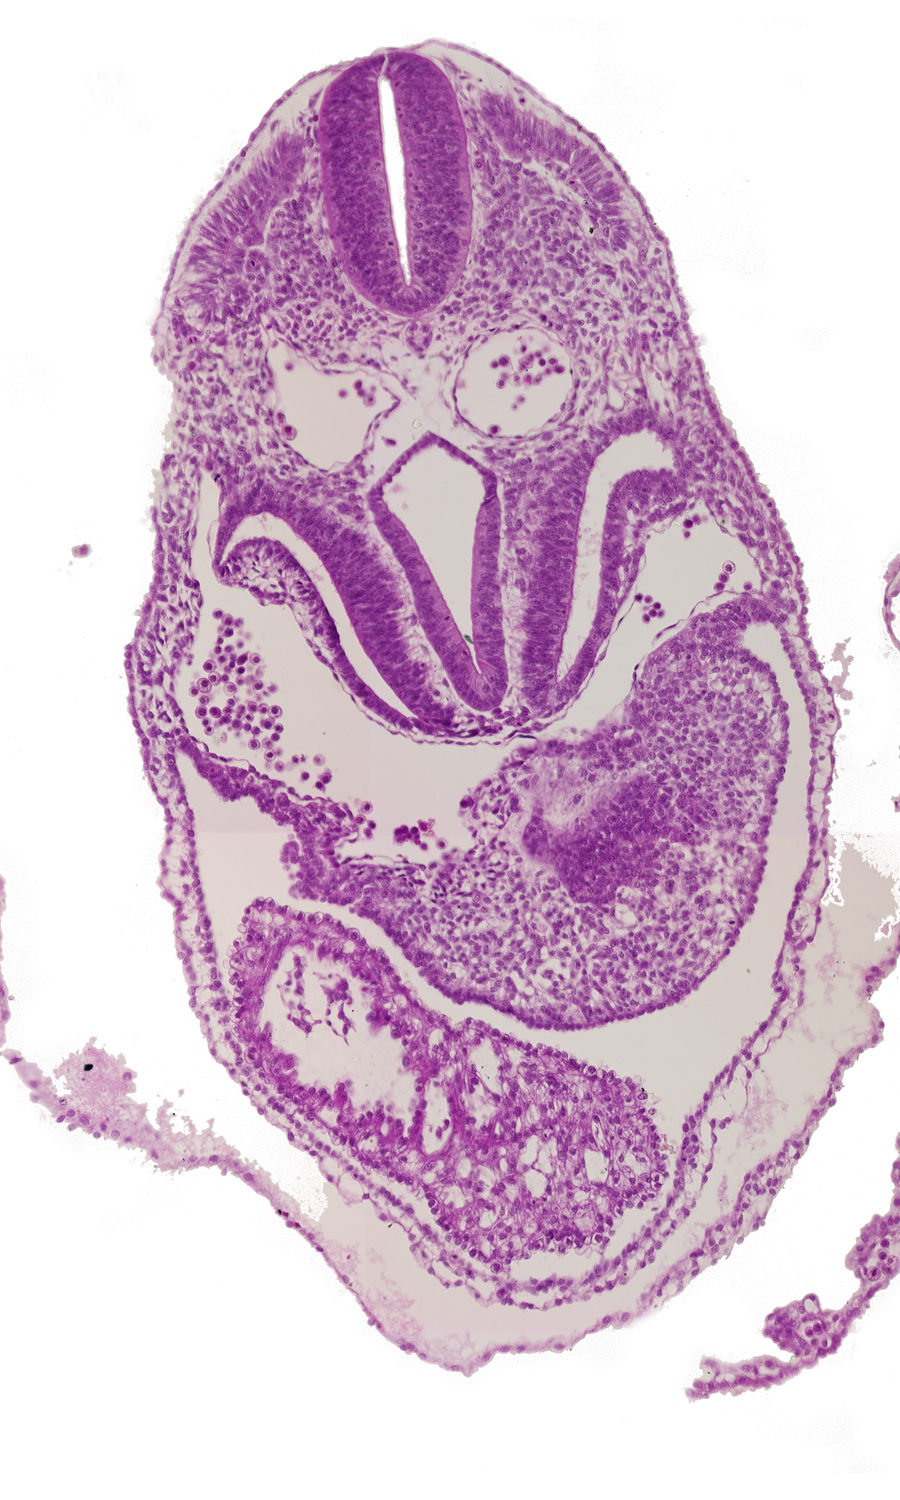 caudal edge of respiratory primordium, caudal part of ventricles, cephalic wall of hepatic antrum, dermatomyotome 5 (C-1), foregut, junction of right horn of sinus venosus and right postcardinal vein, left horn of sinus venosus, pericardial cavity, pericardioperitoneal canal (pleural cavity), postcardinal vein, right horn of sinus venosus, sclerotome, septum transversum, ventral body wall